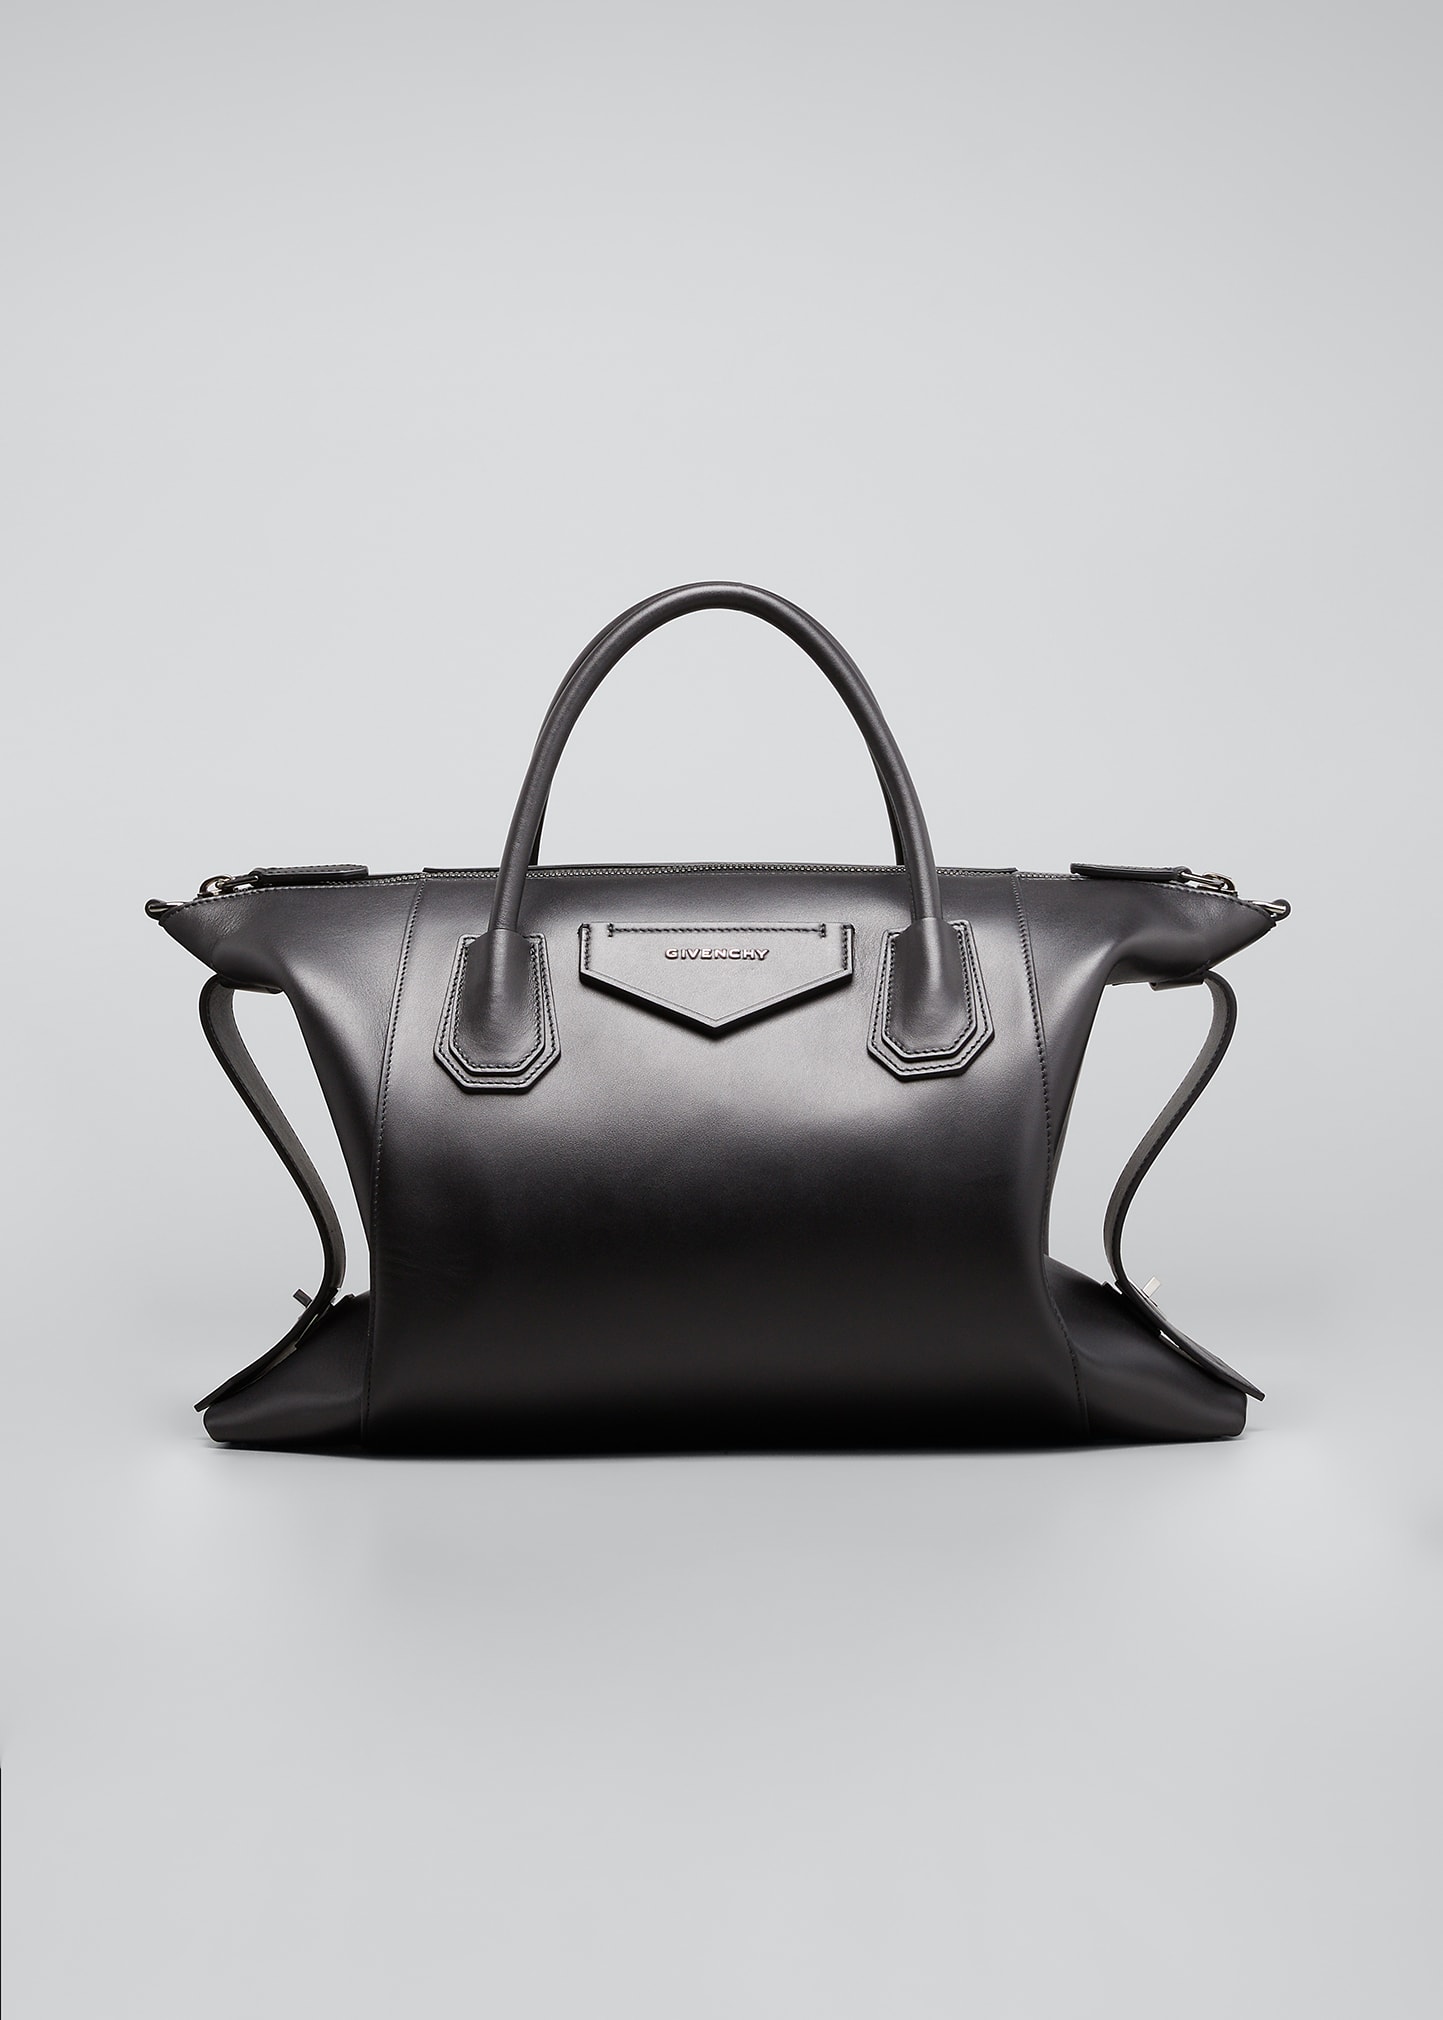 Givenchy Antigona Toy Crossbody Bag in Leather - Bergdorf Goodman